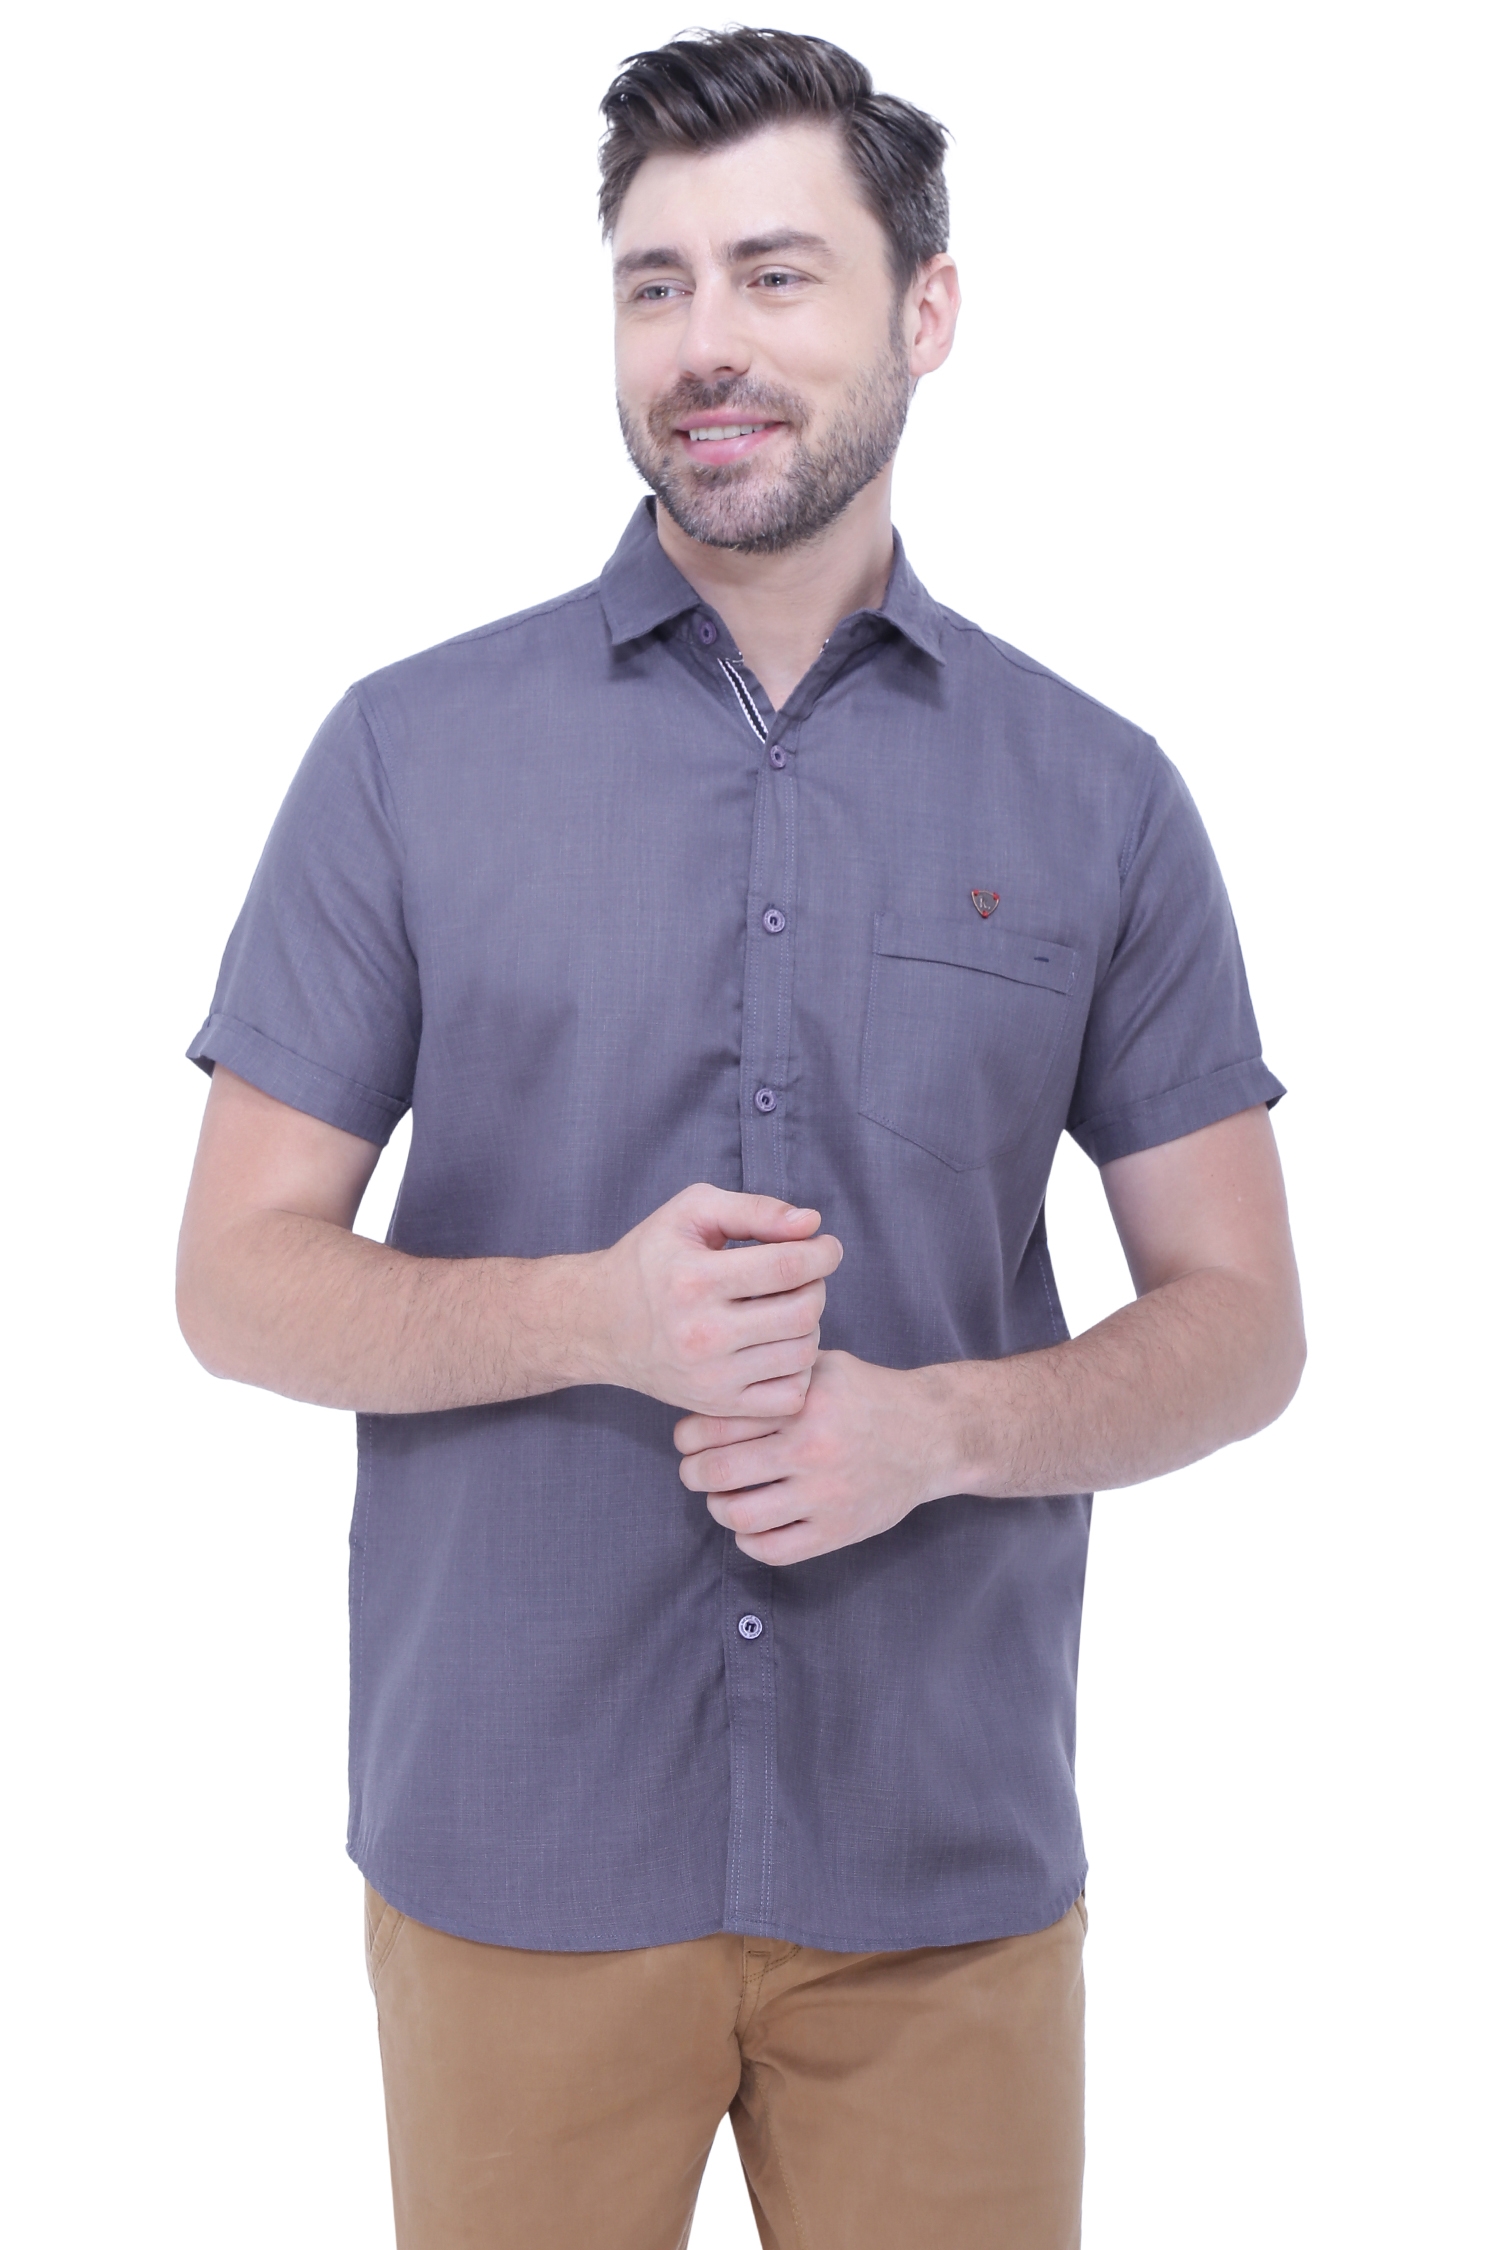 Kuons Avenue | Kuons Avenue Men's Linen Blend Half Sleeves Casual Shirt-KACLHS1221 0